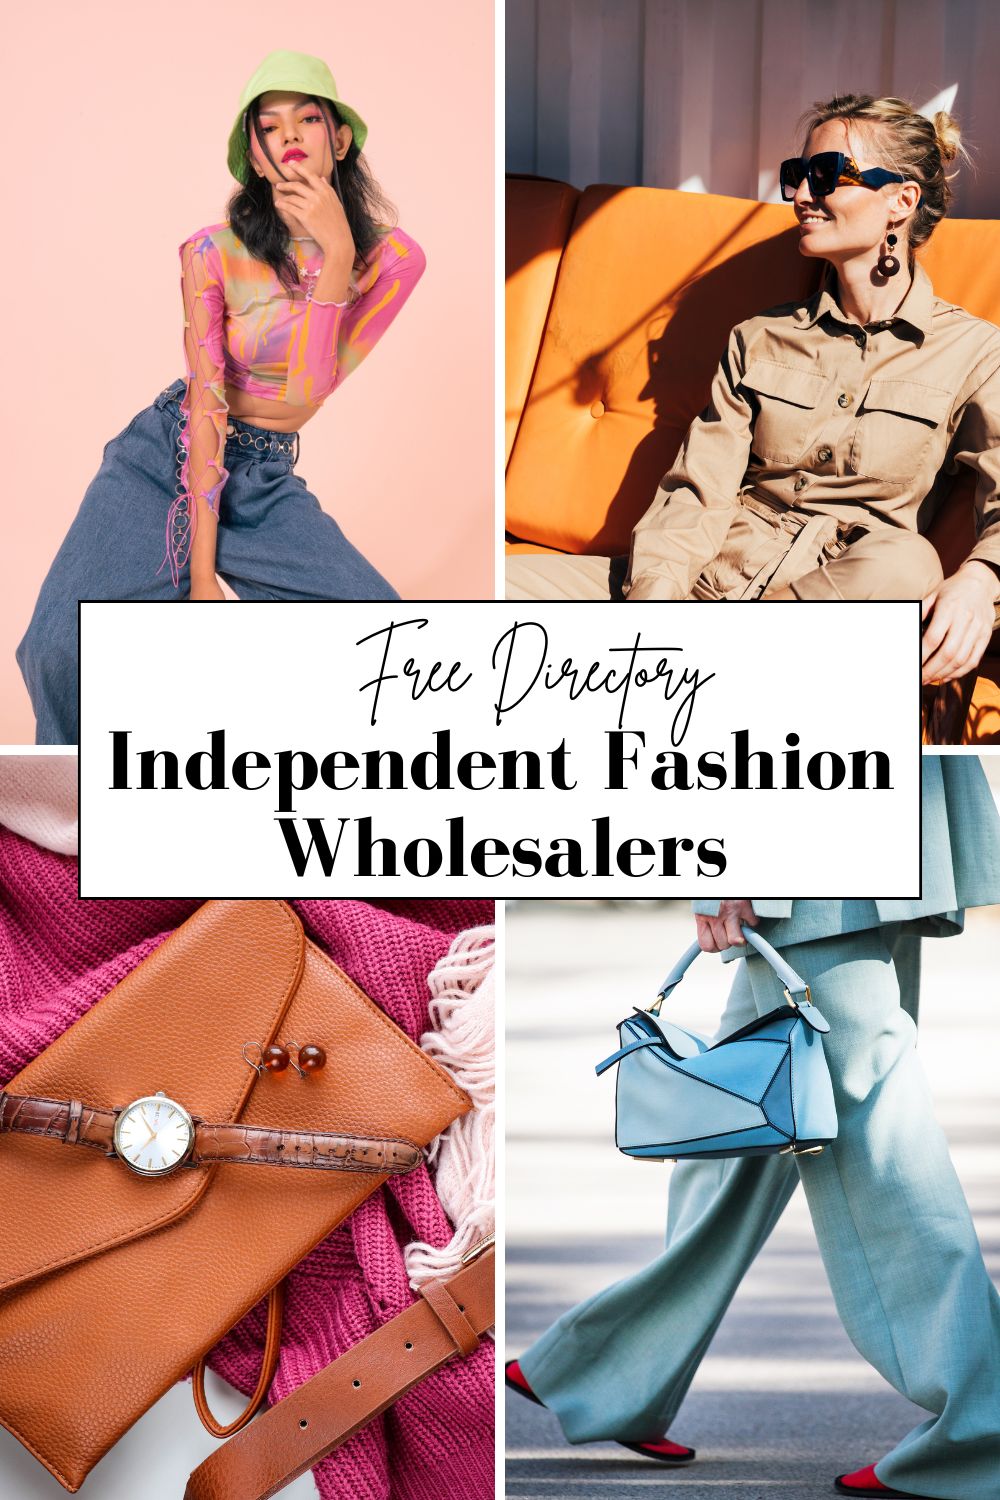 Independent Fashion Wholesalers